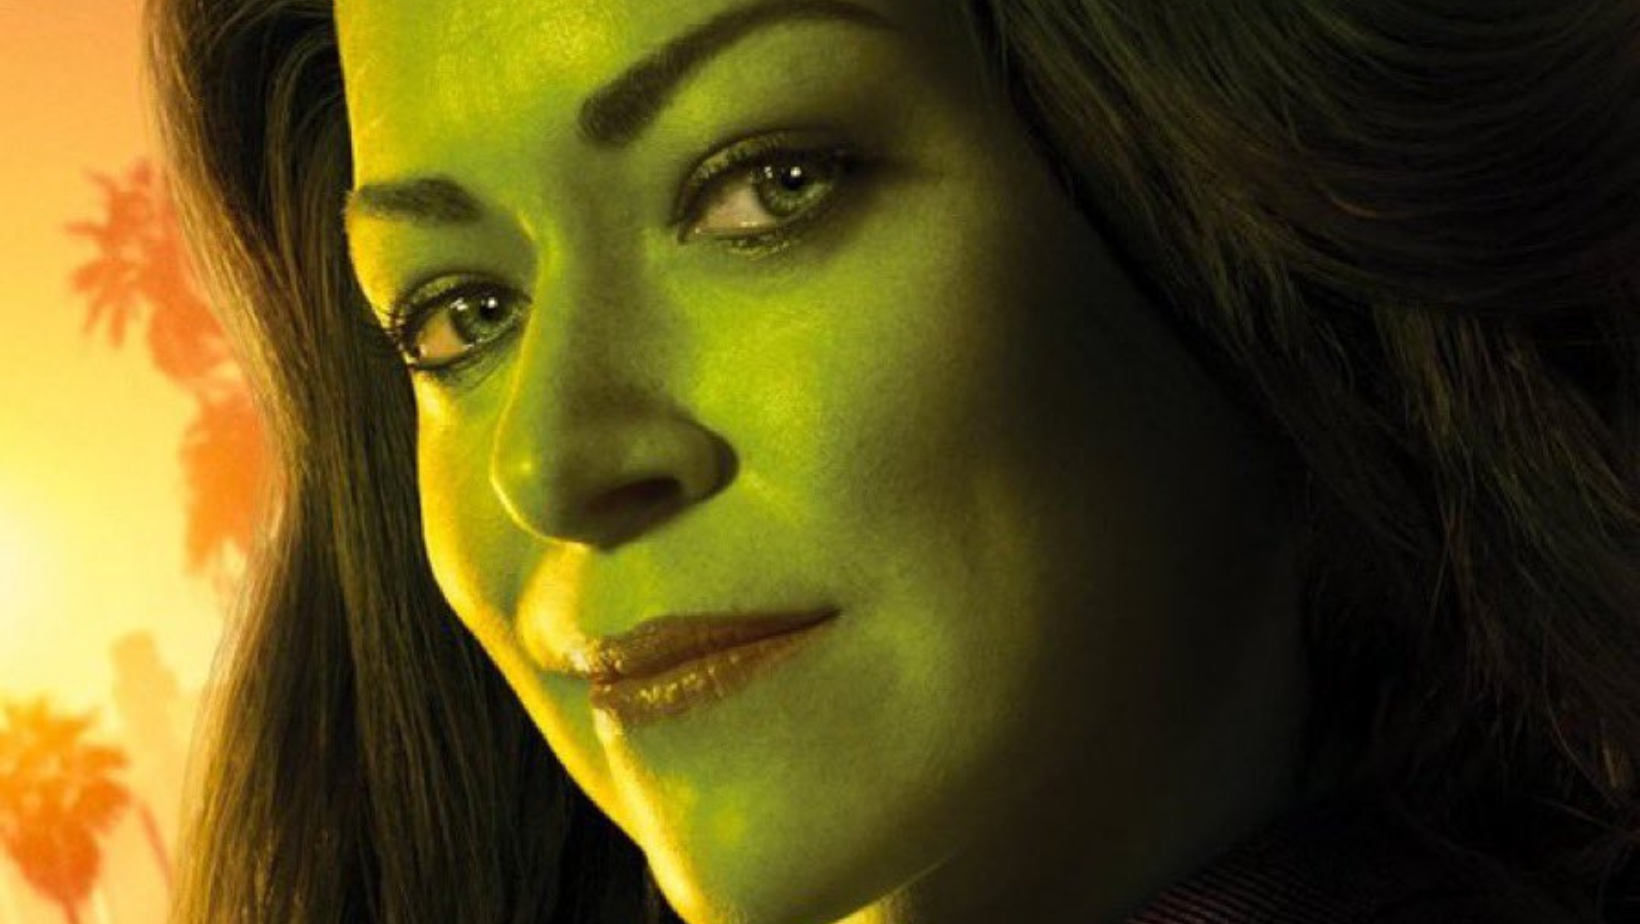 Rotten Tomatoes - #SheHulk season 1 is Certified Fresh at 87% on